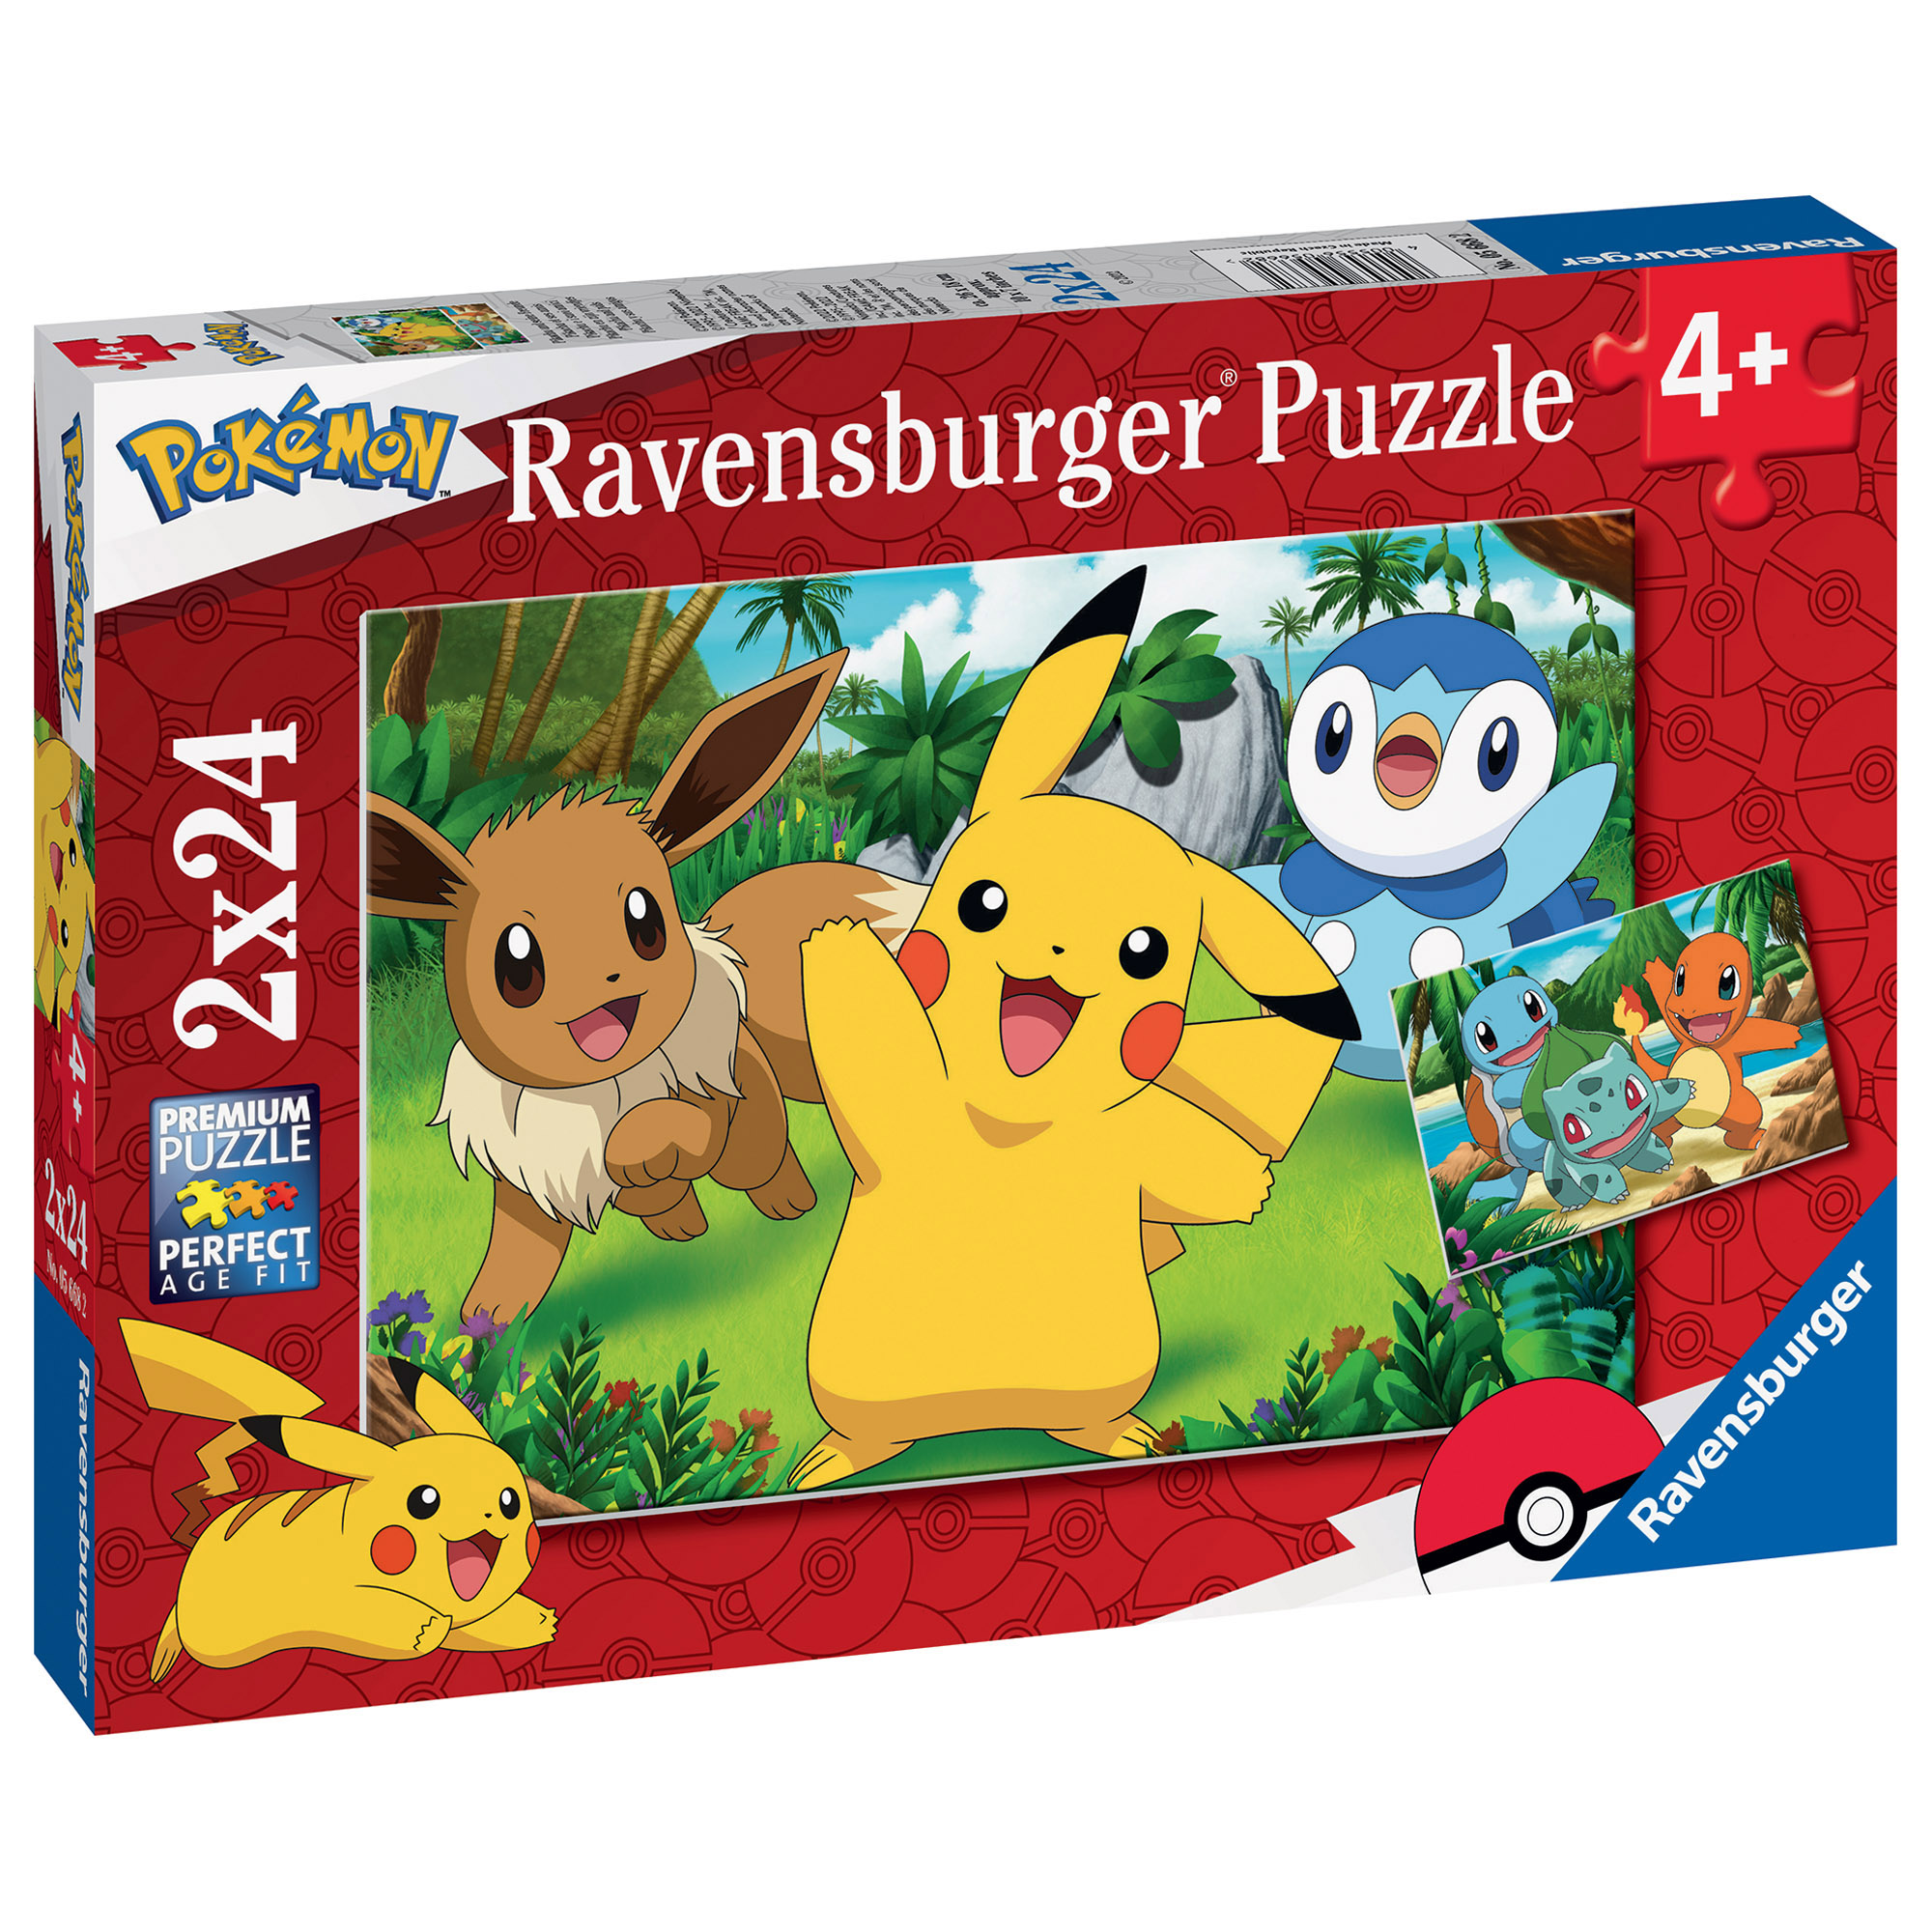 Ravensburger - puzzle pokémon, collezione 2x24, 2 puzzle da 24 pezzi, età raccomandata 4+ anni - RAVENSBURGER